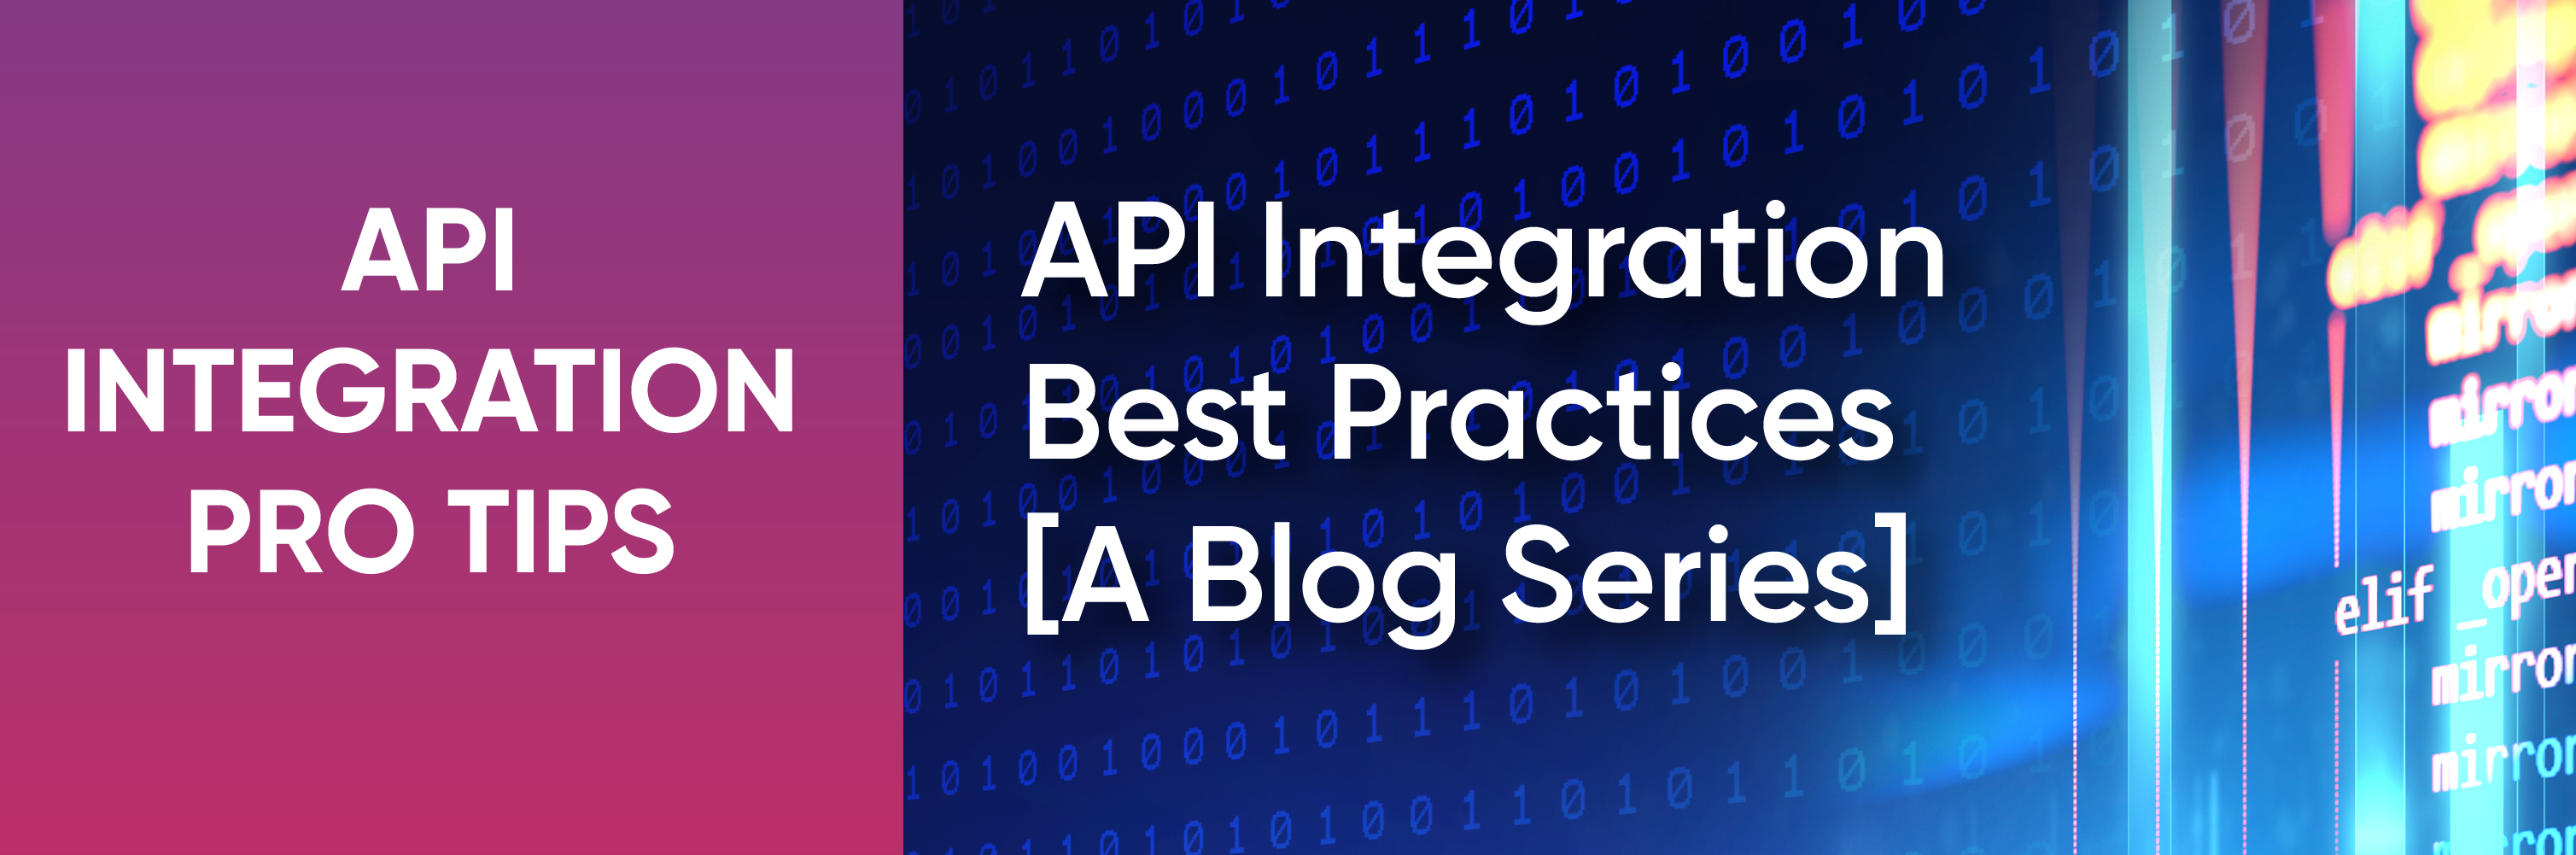 API integration best practices